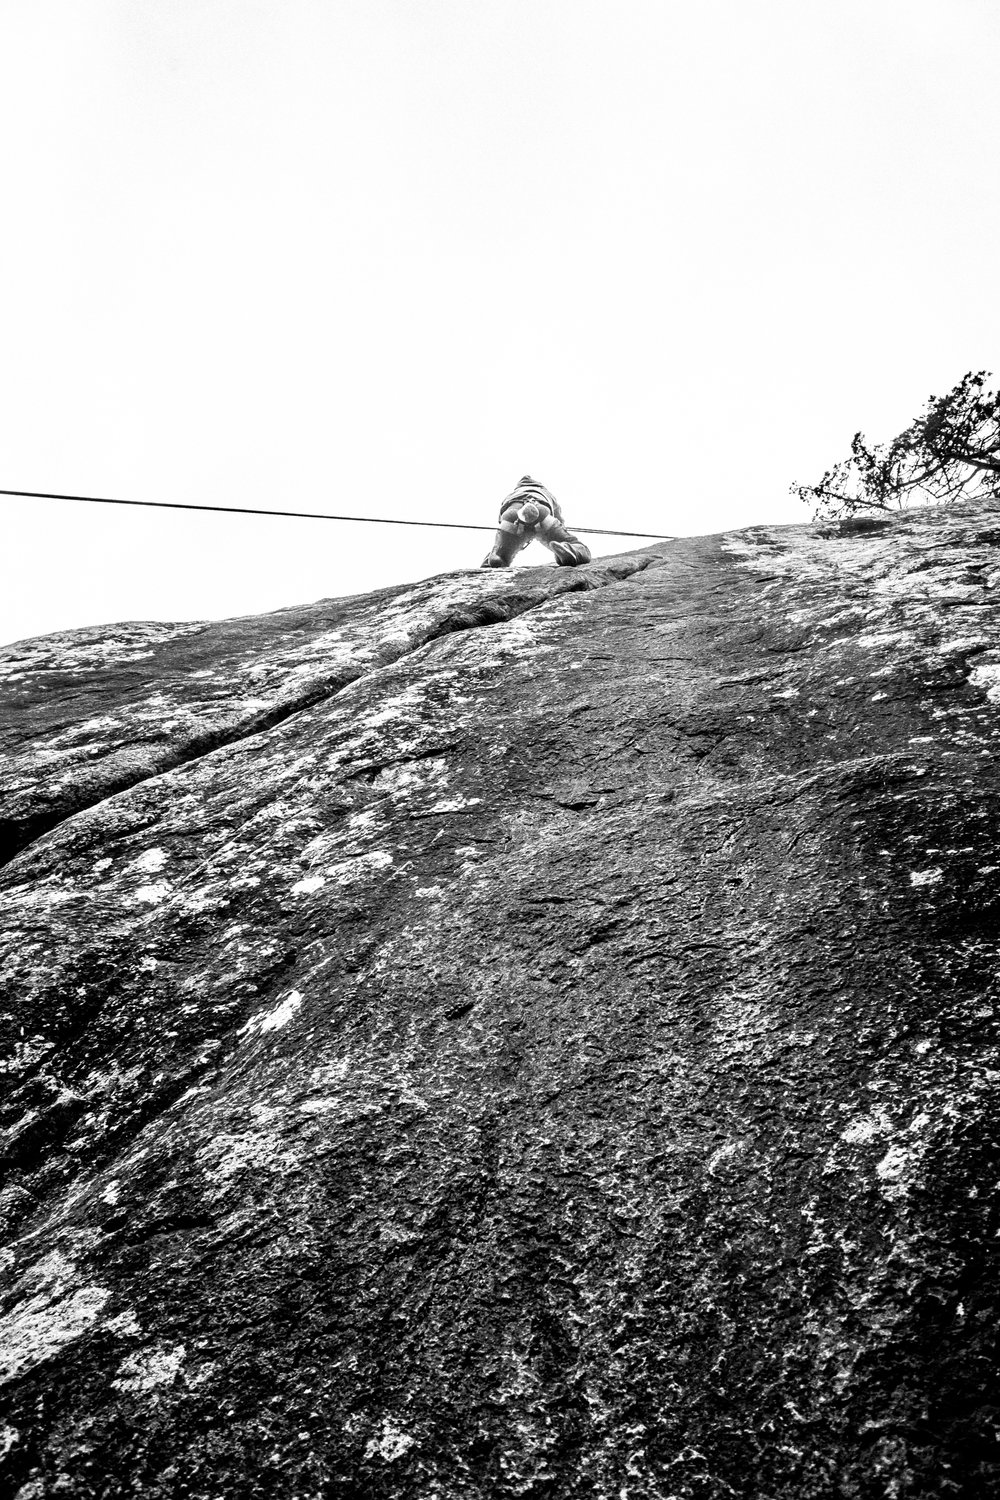 4-22-17 Rock Climbing black & white-13.jpg